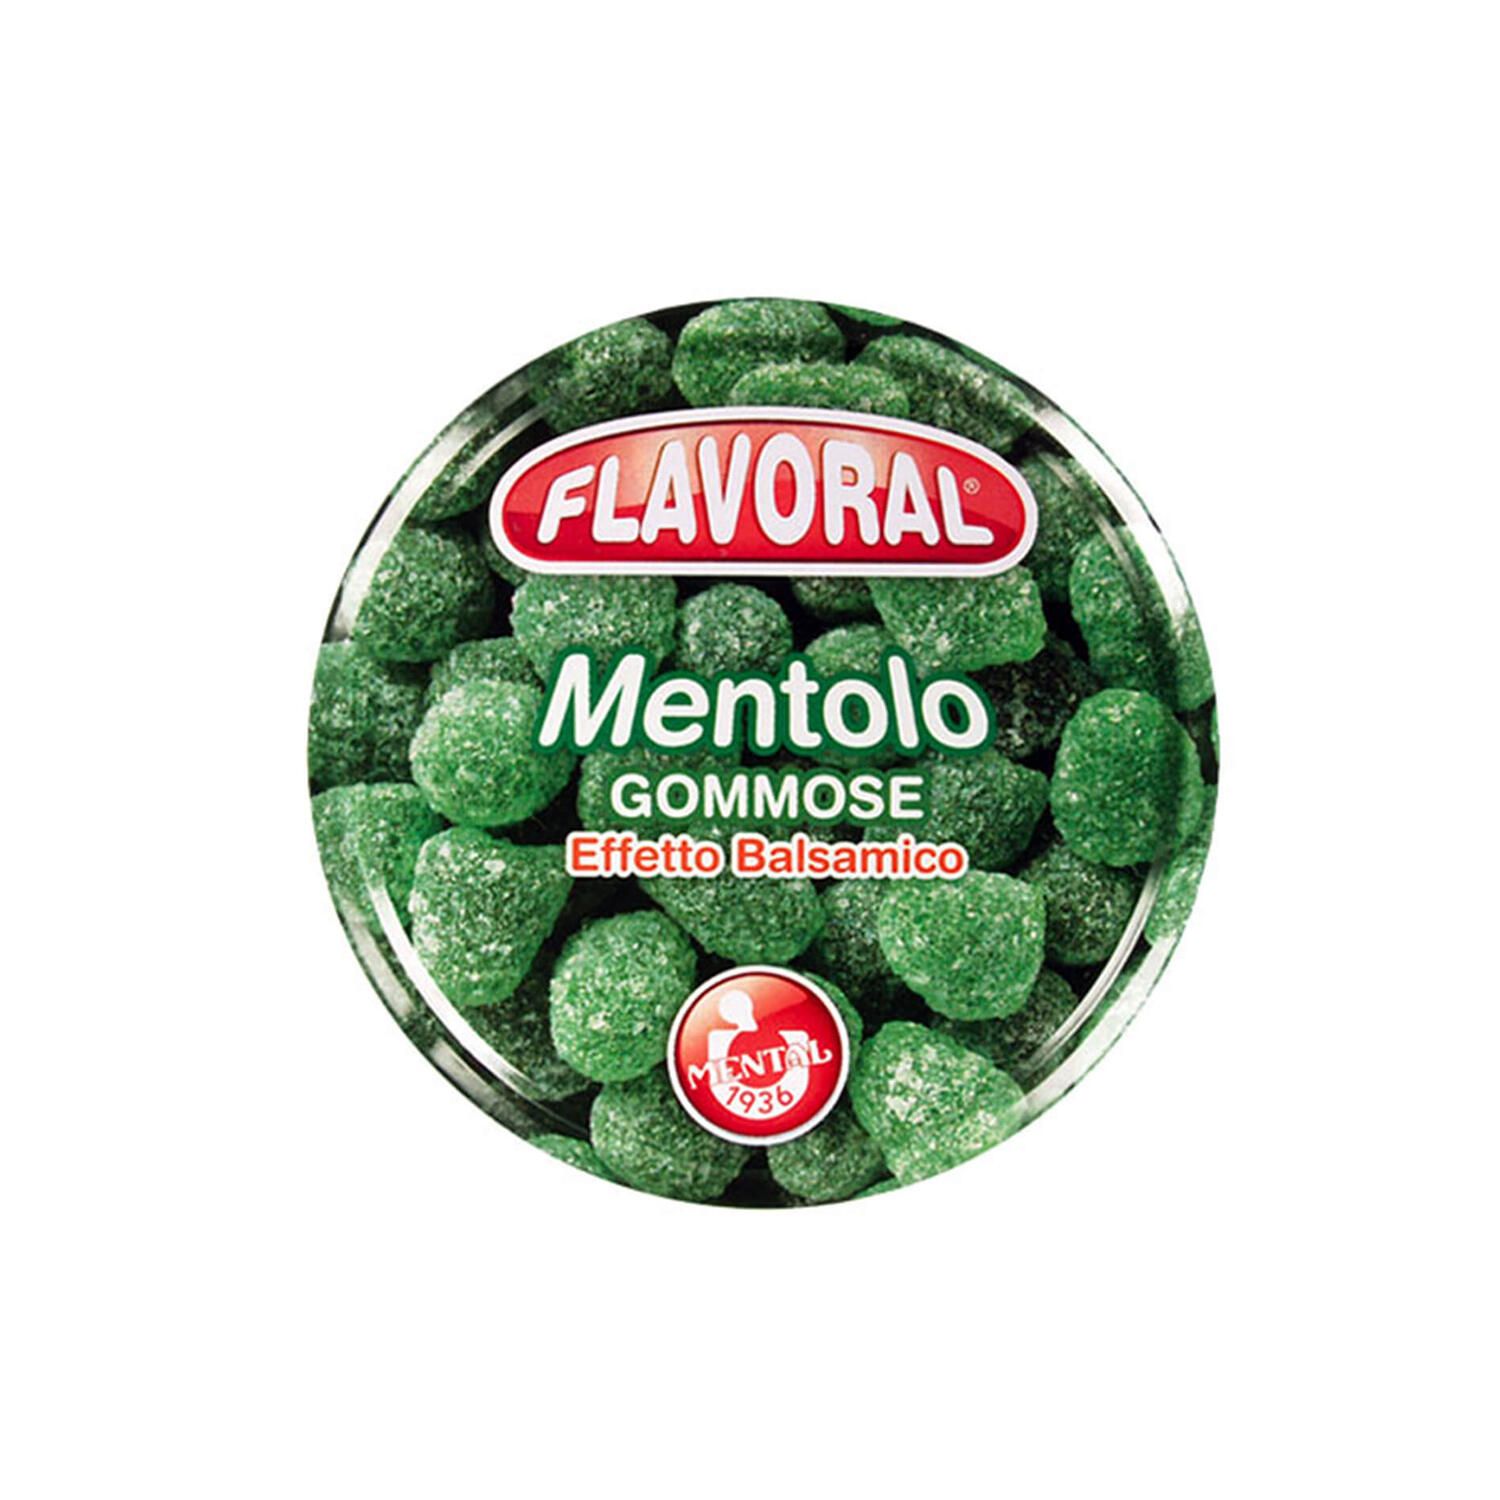 Flavoral Mentolo - Single Pack - Flavoral